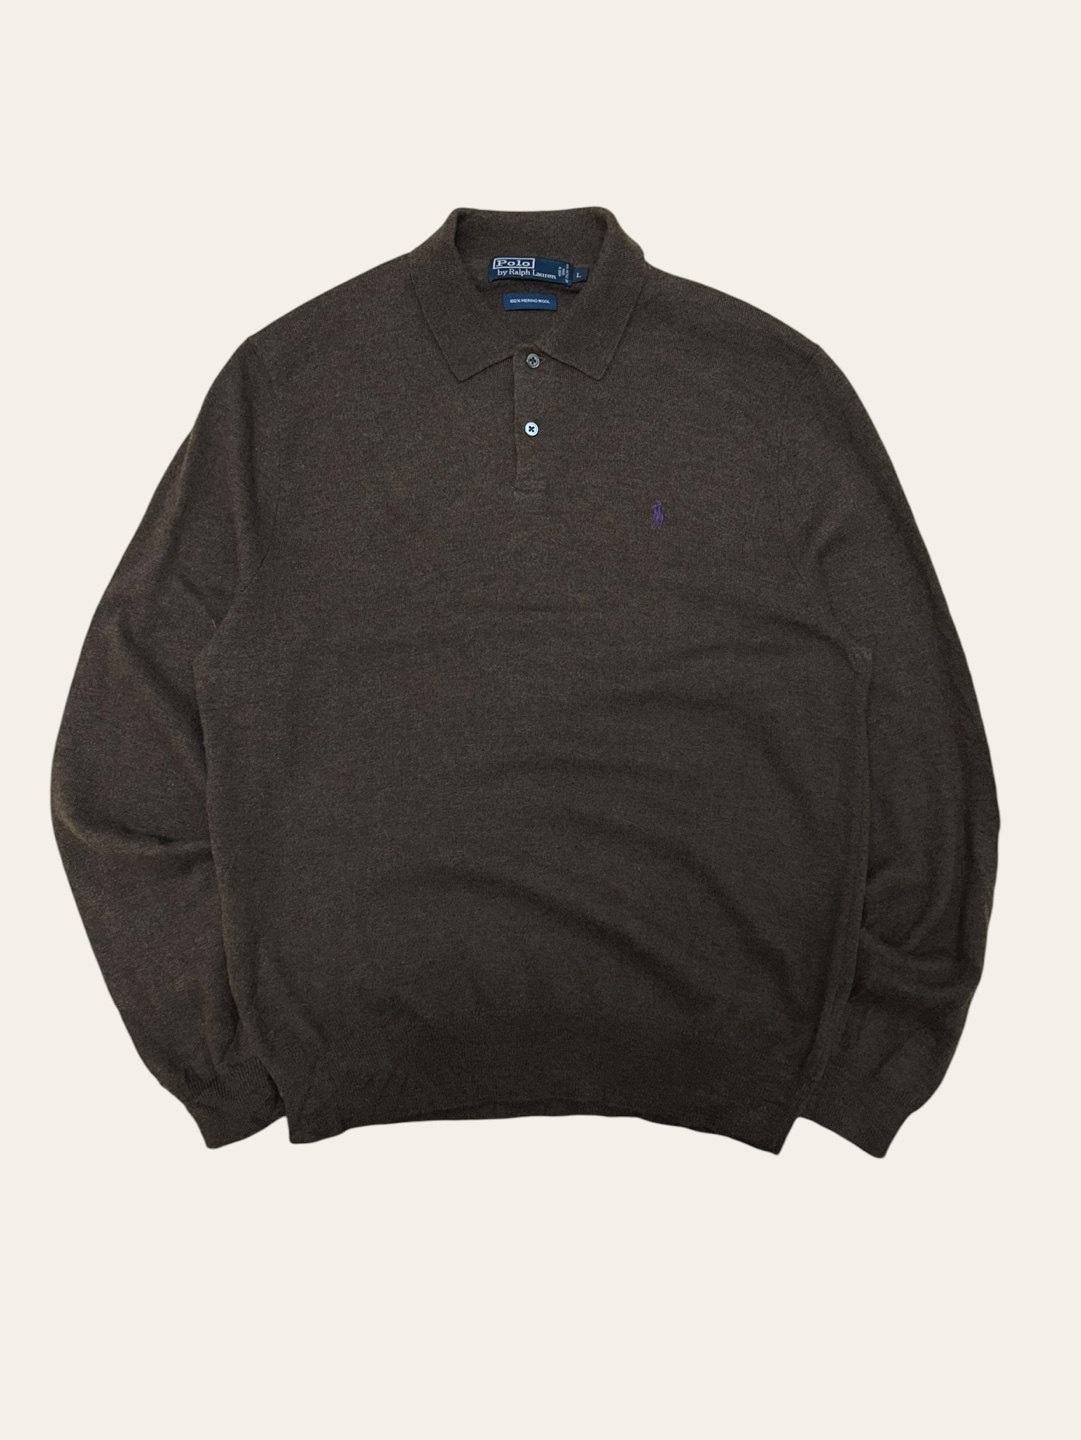 (From USA)Polo ralph lauren brown merino wool collar sweater L